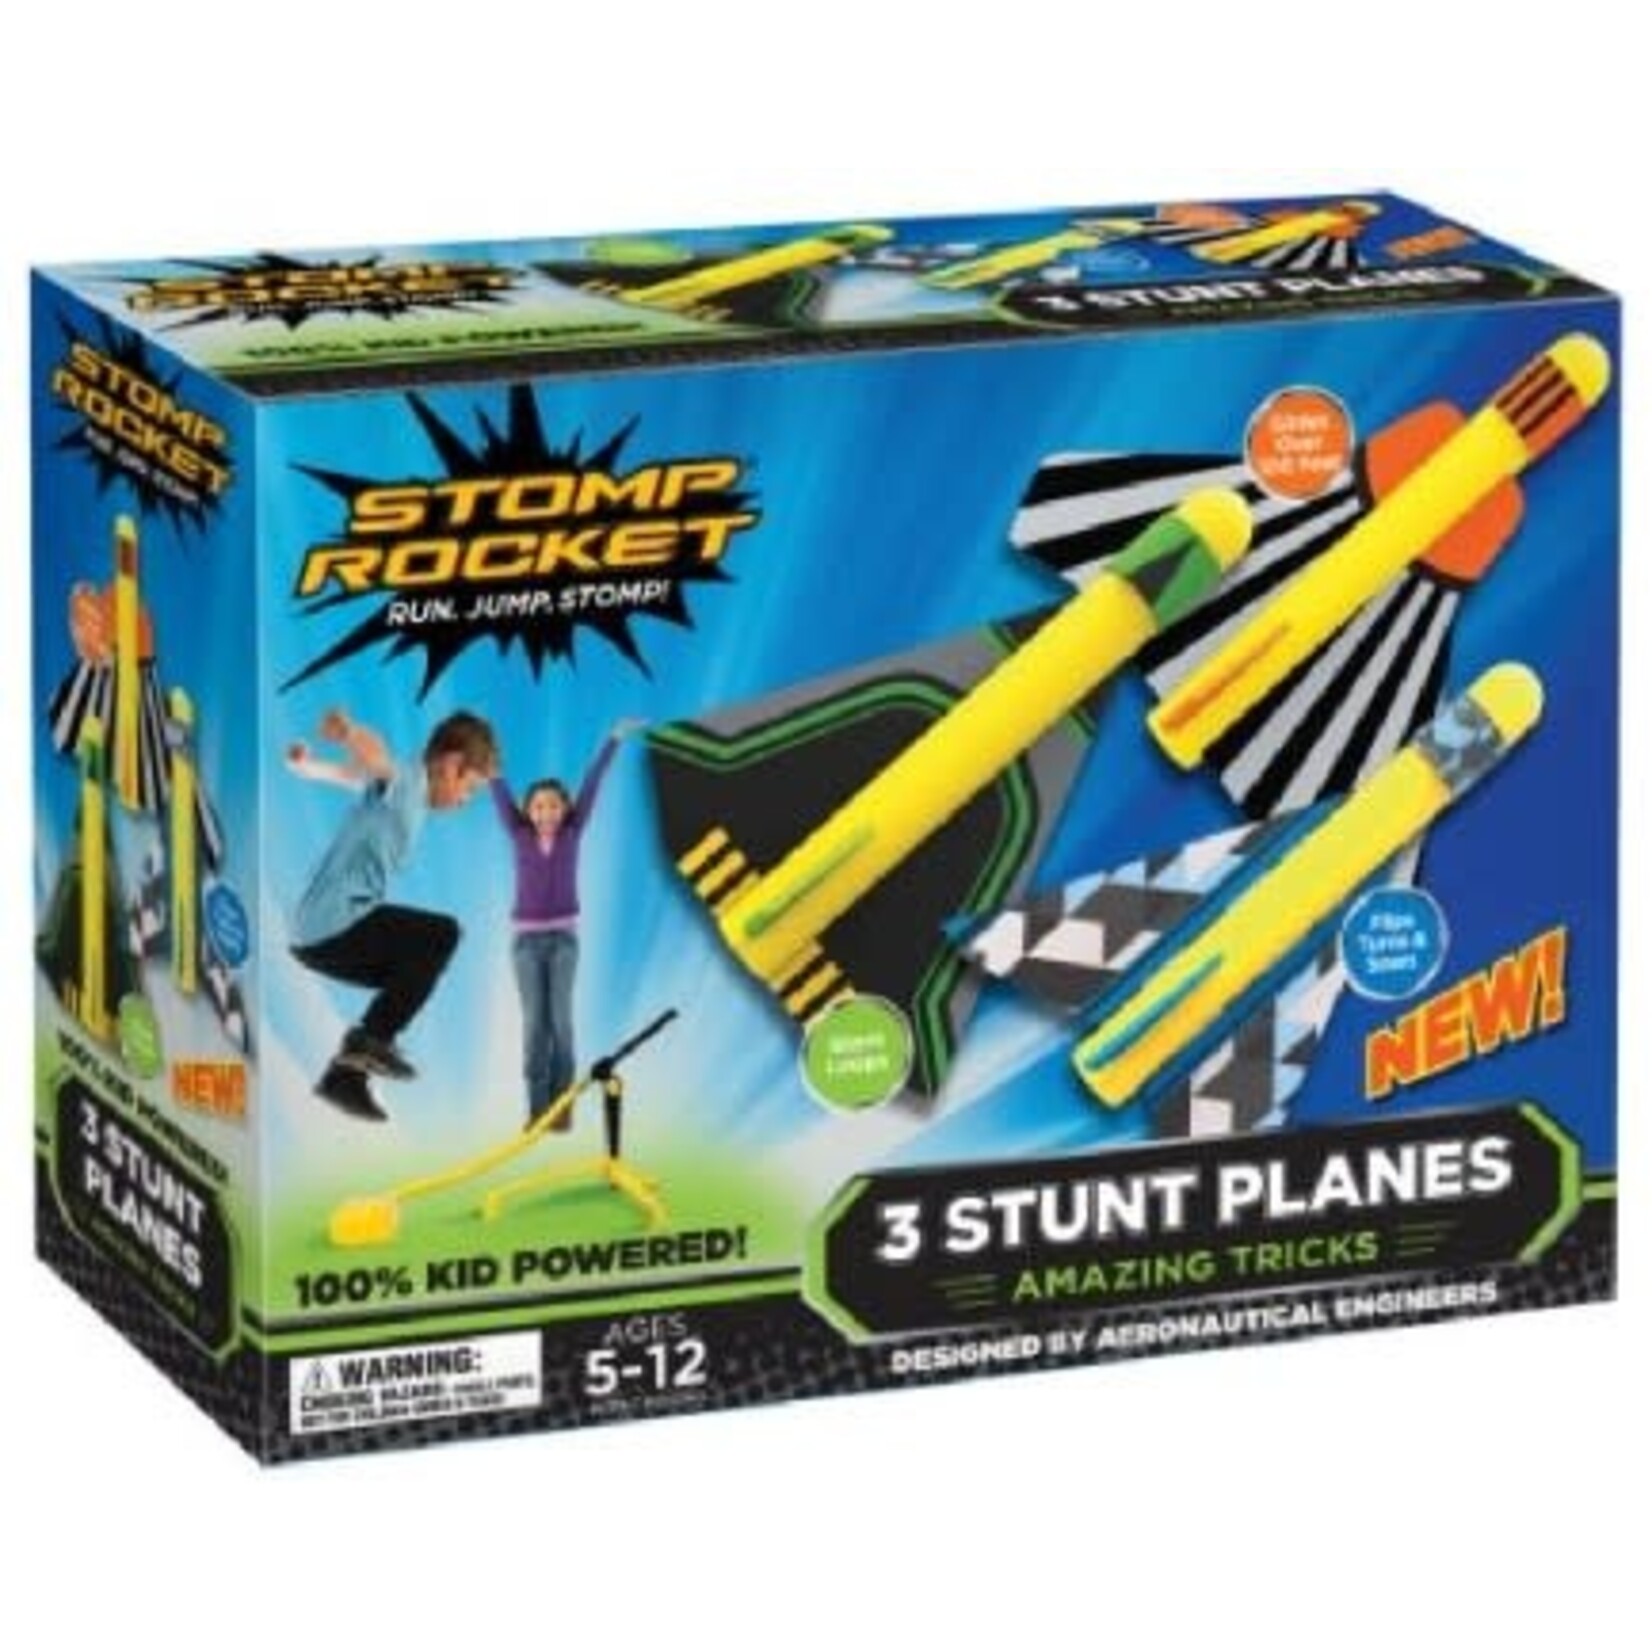 Stomp Rocket Stunt Planes Stomp Rocket Set (3 planes, stand, stomp pad)